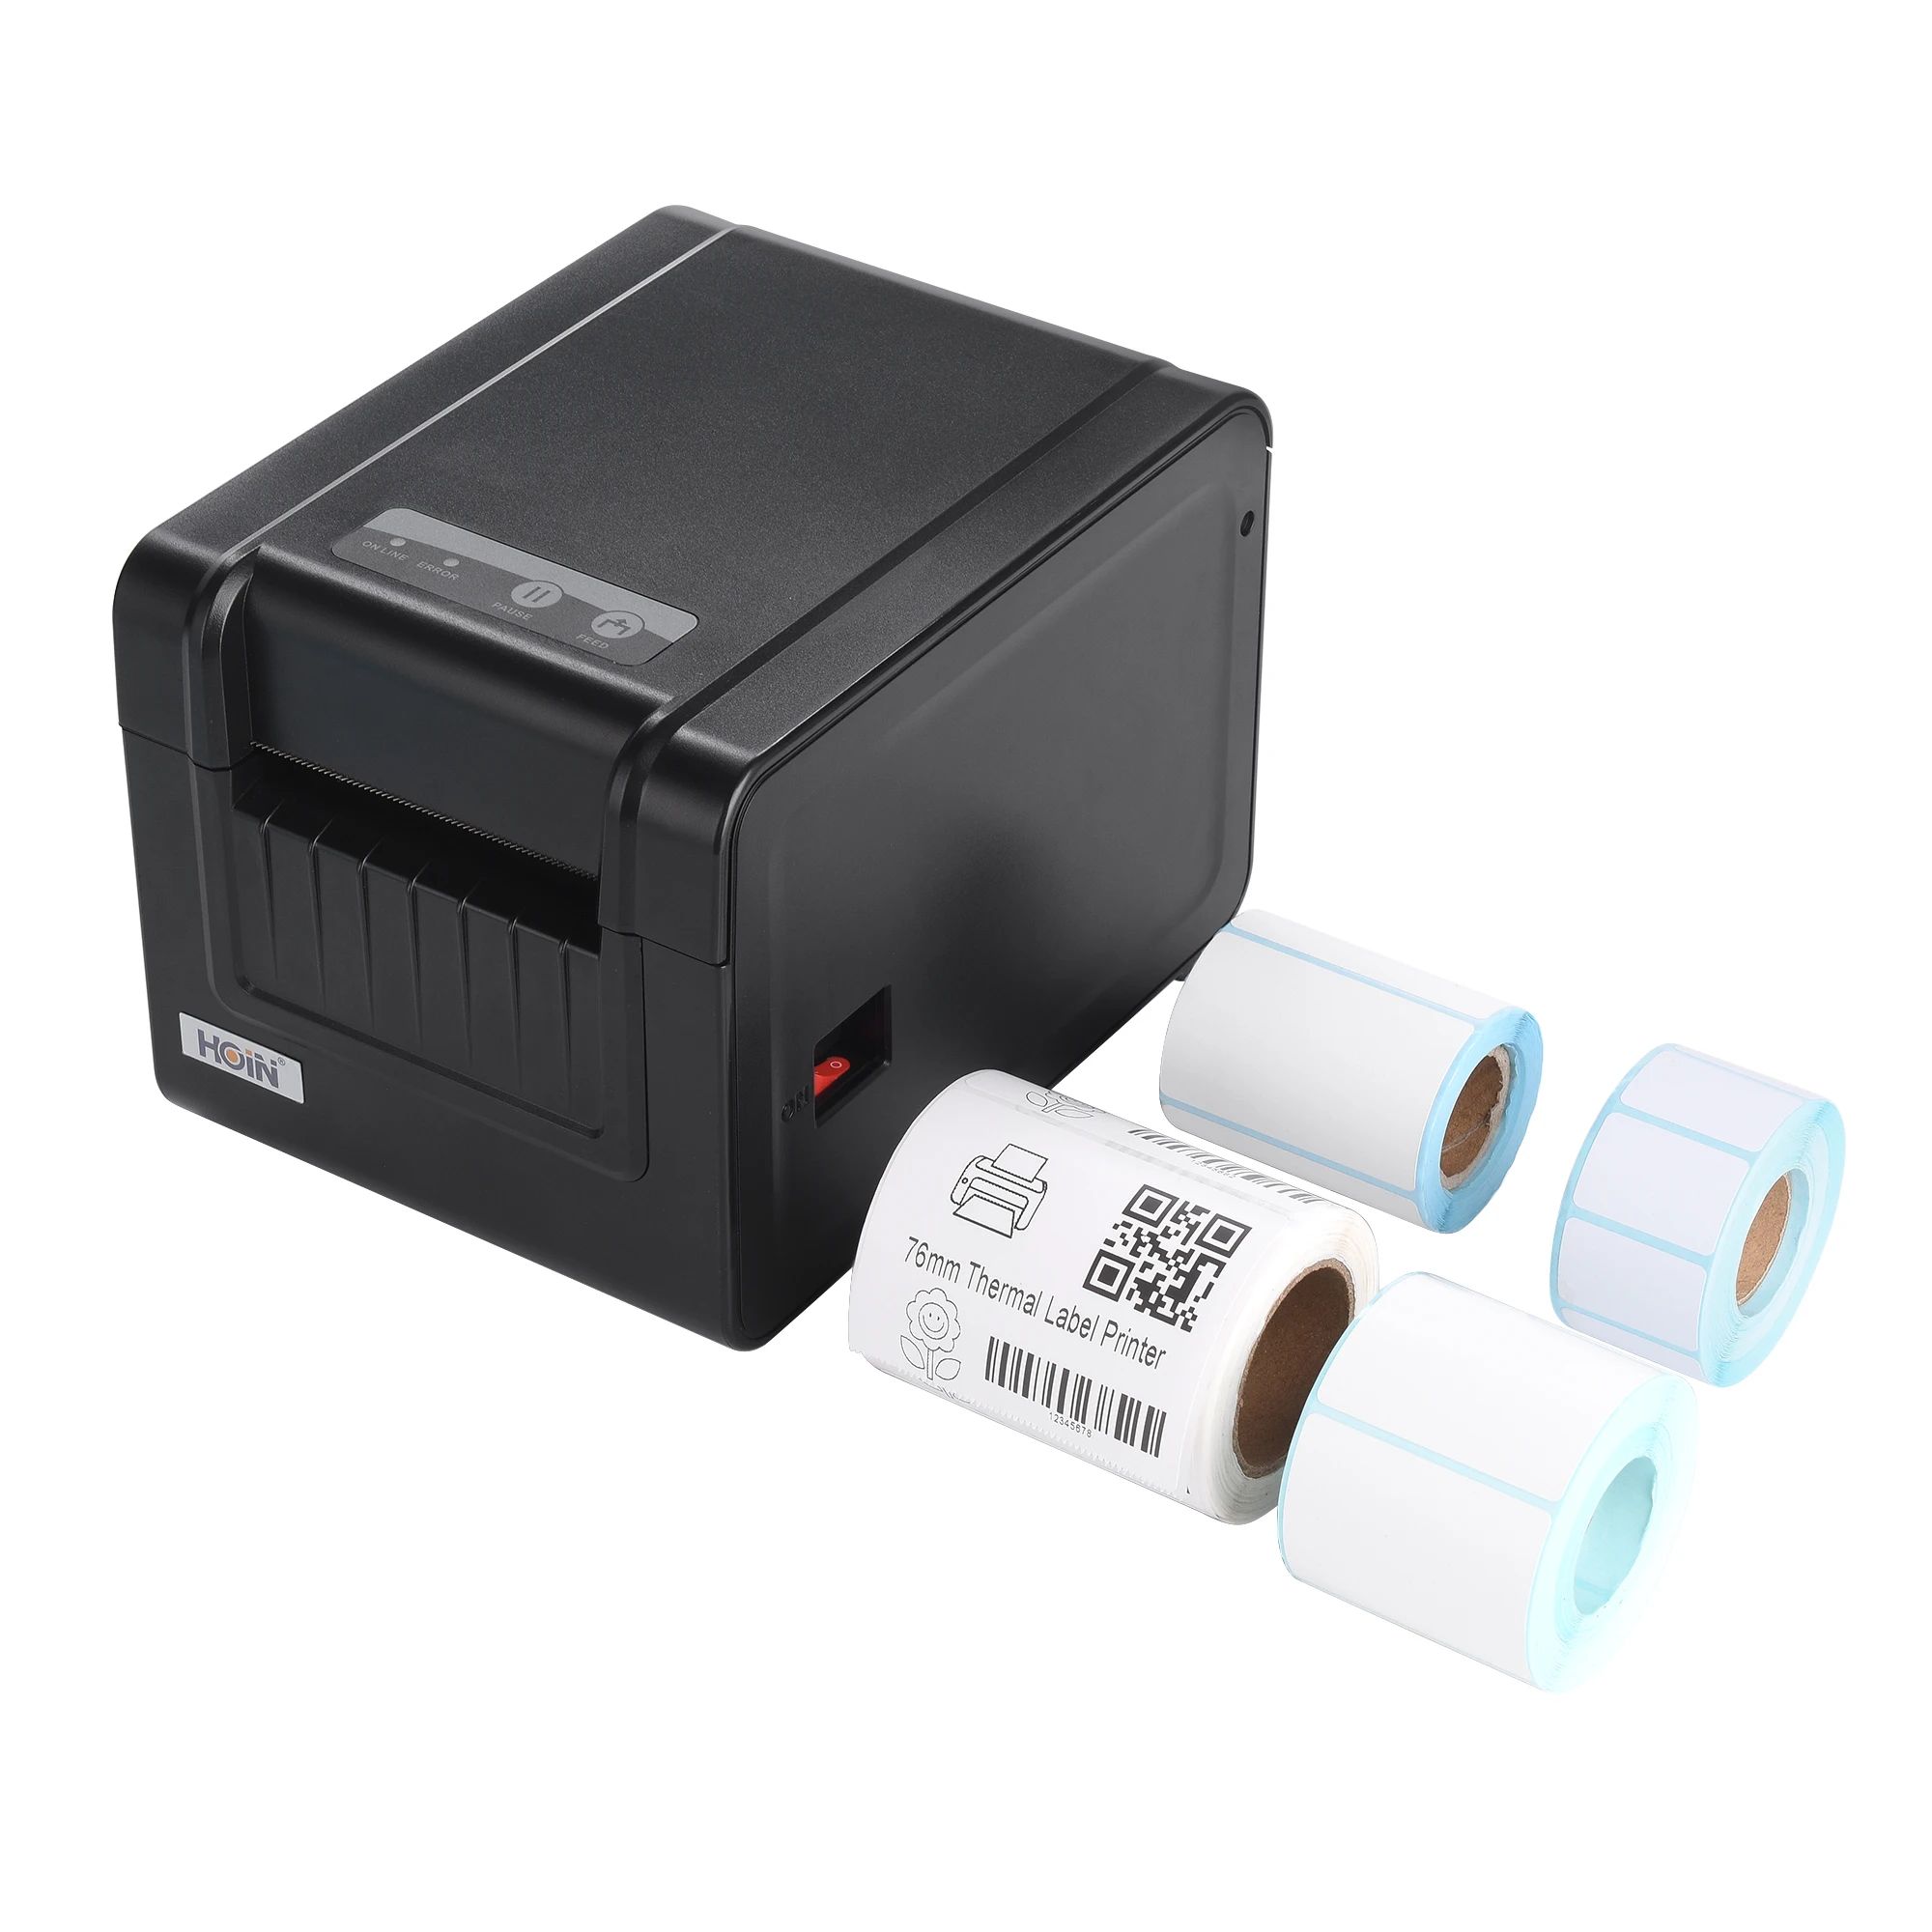 Hoin high Quality Barcode Sticker Mini Thermal Label Printer Desktop Receipt Thermal sticker Mobile label printer